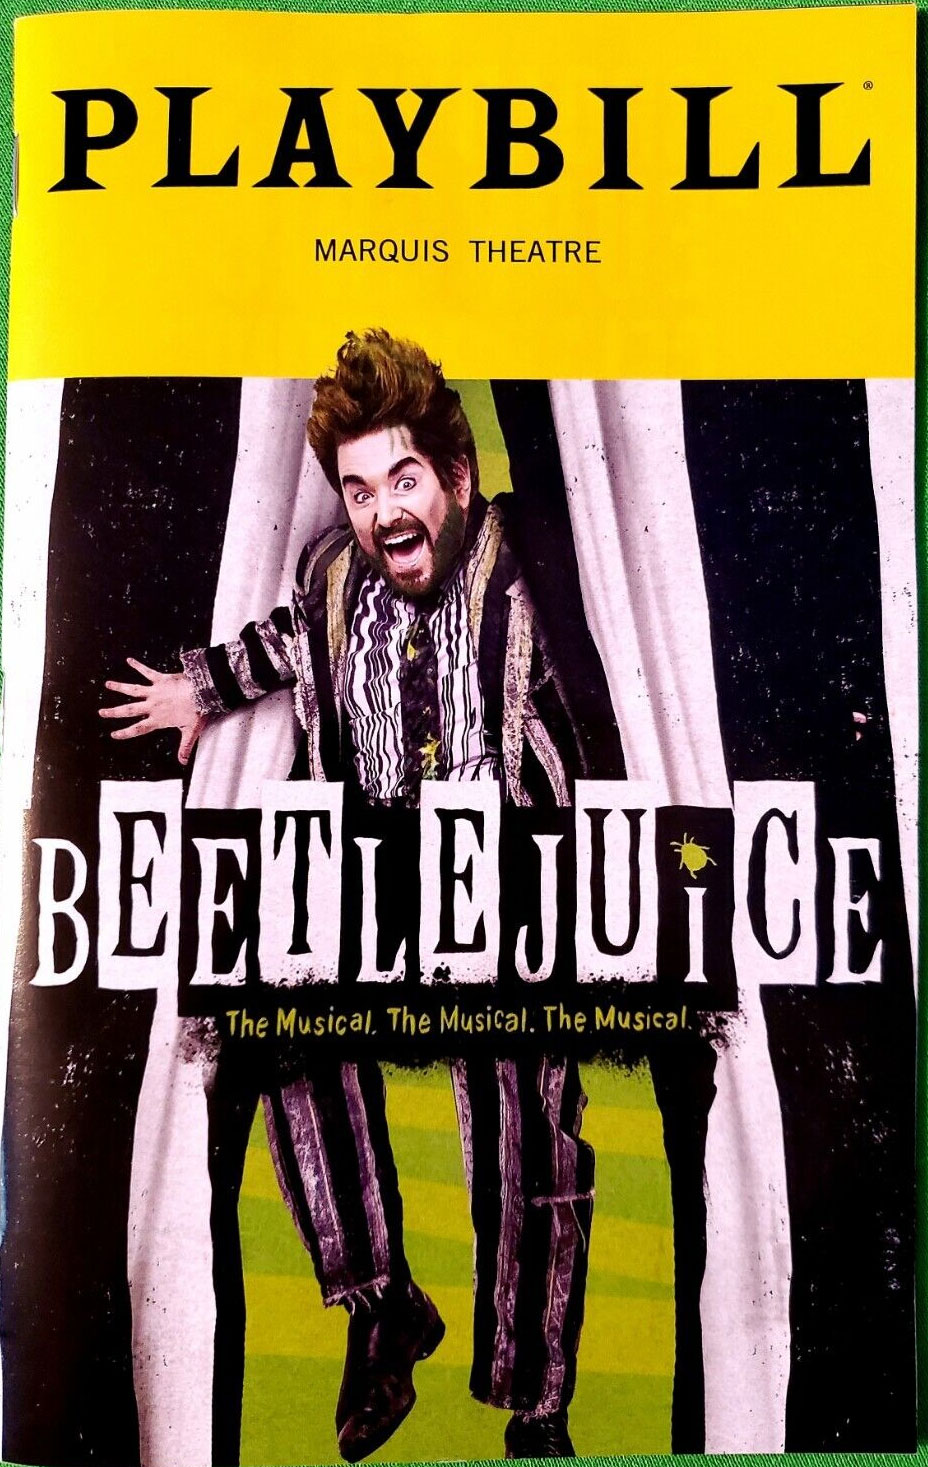 Beetlejuice on Broadway Playbill